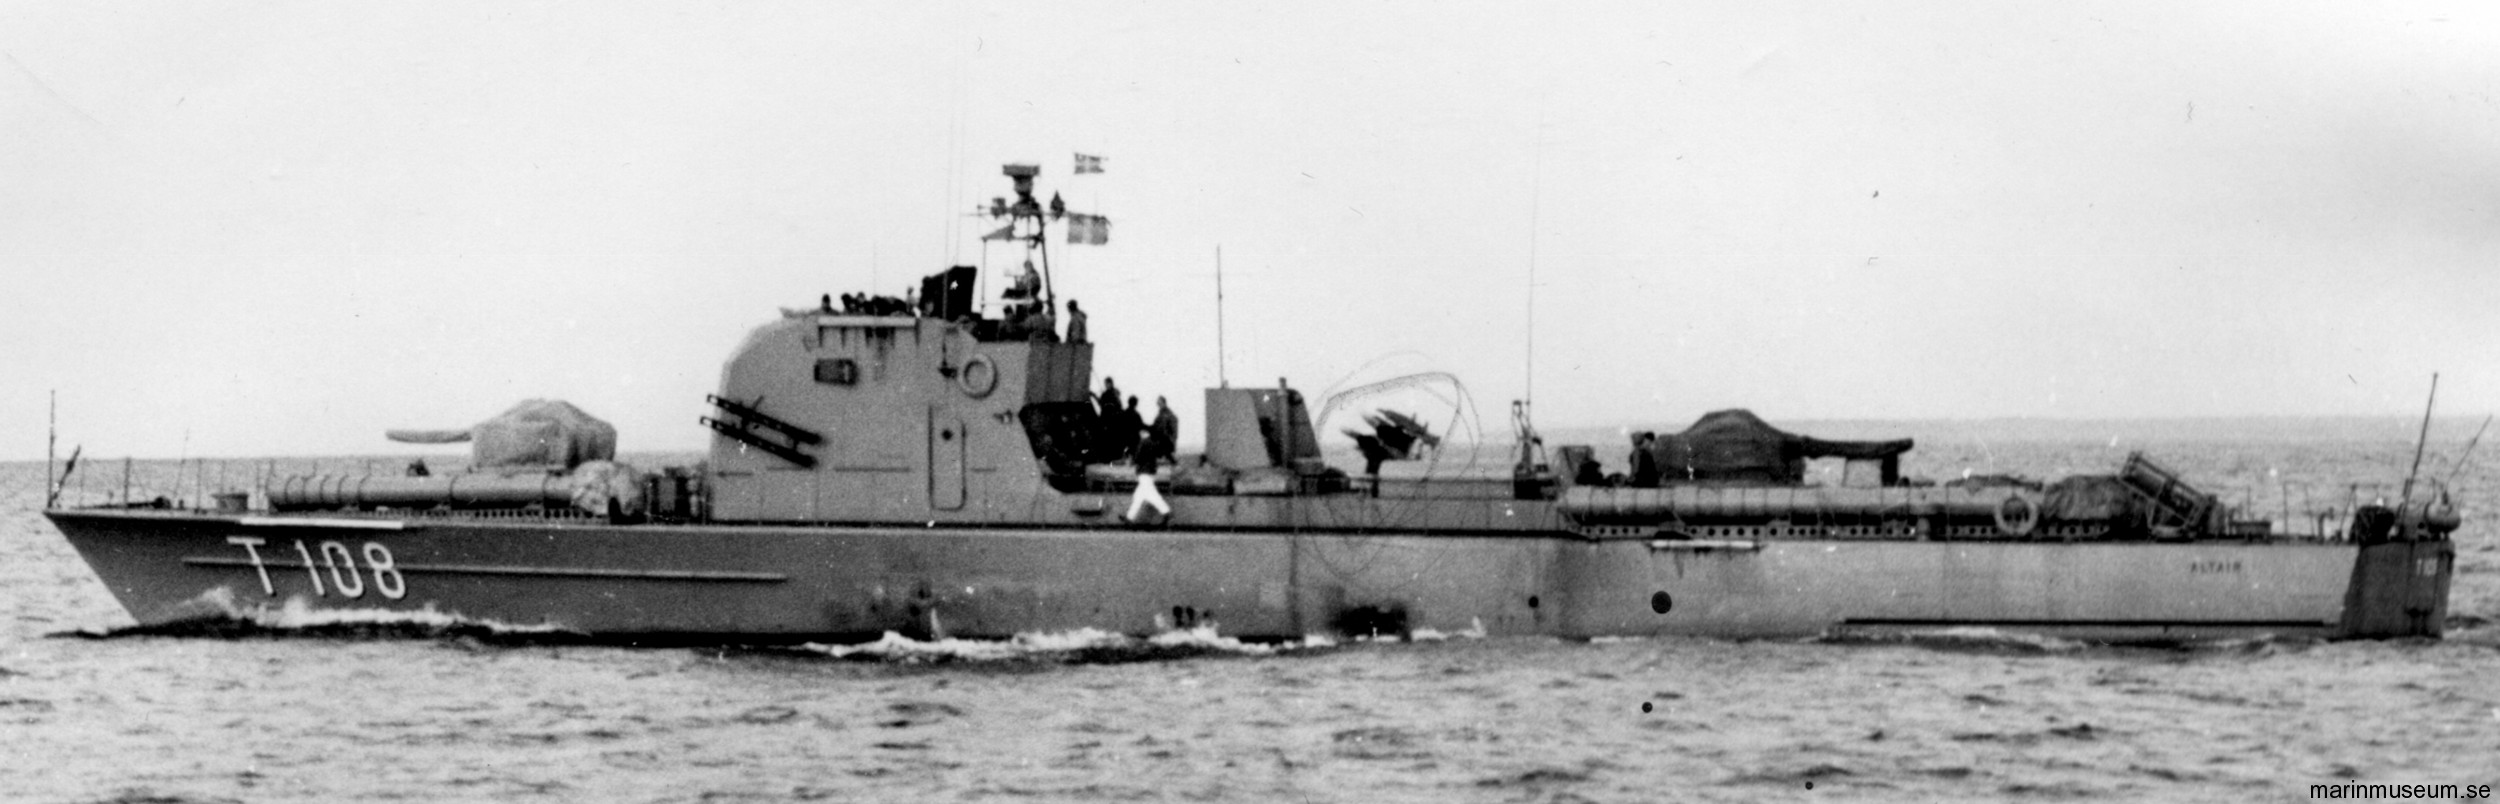 t108 altair hms hswms plejad class fast attack craft torpedo boat vessel swedish navy svenska marinen 04